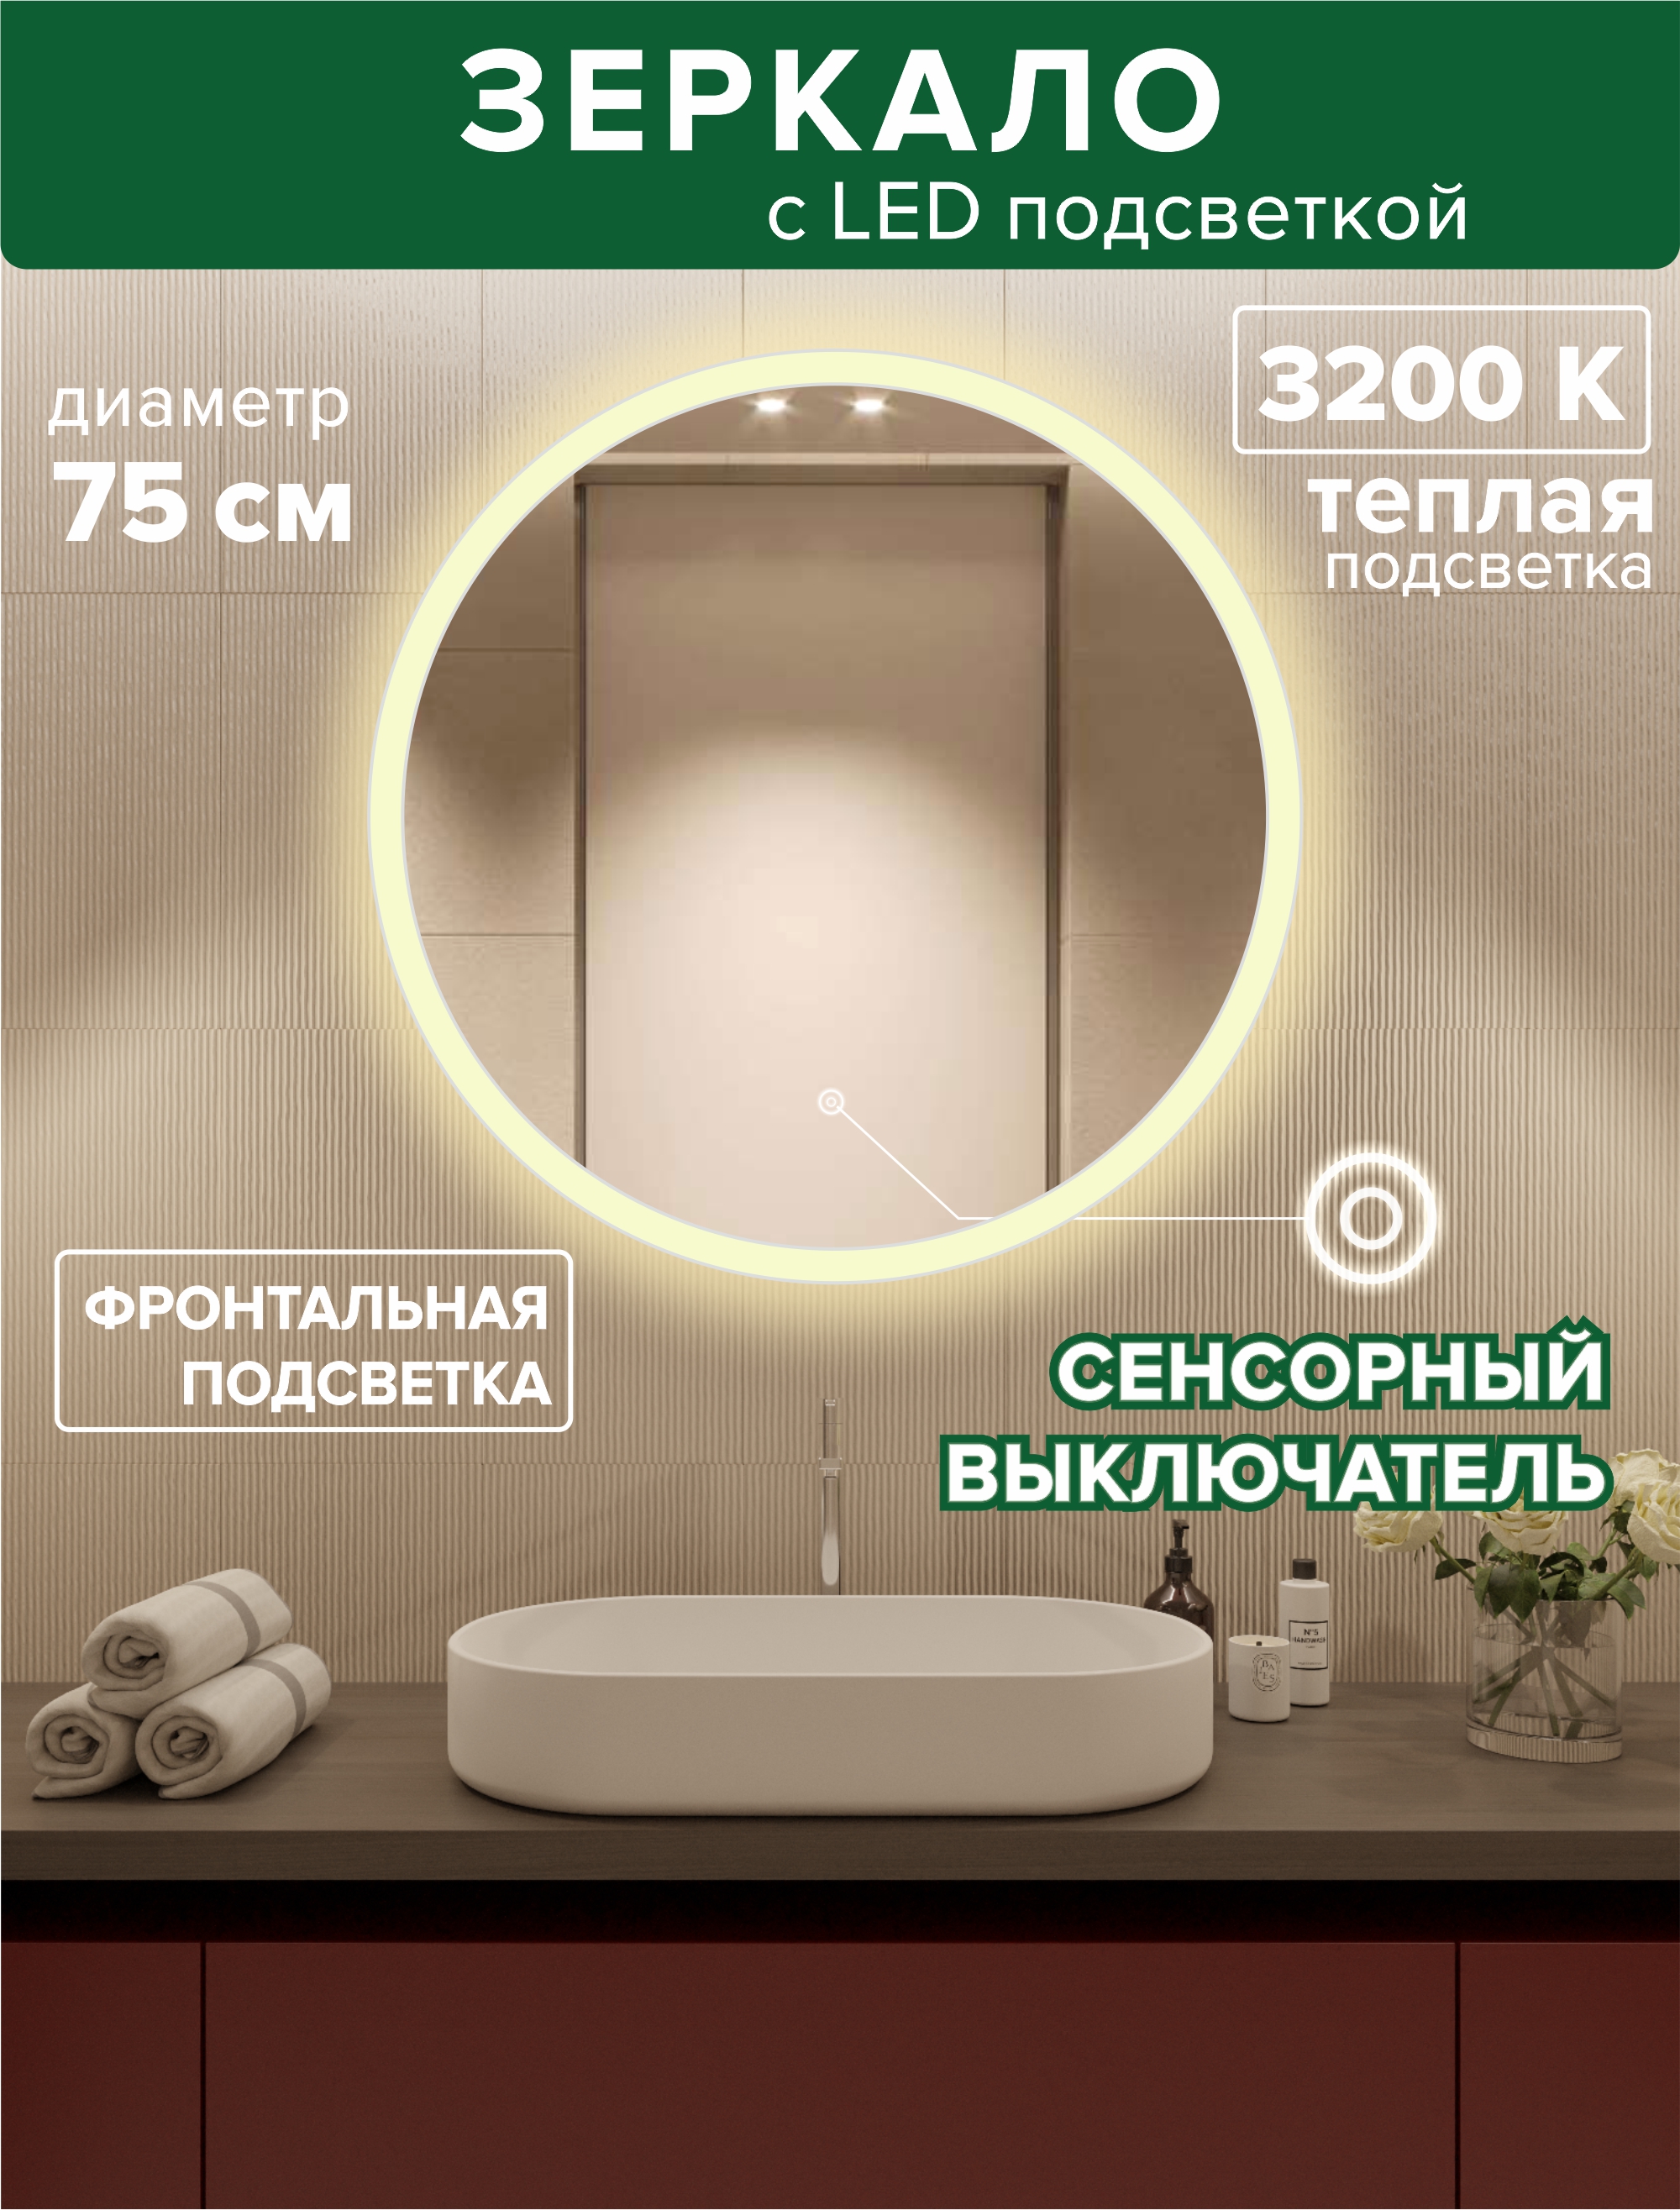 Зеркало для ванной Alfa Mirrors фронтальная теплая подсветка 3200К, круглое 75см,MSvet-75t led plr 100 10m 24v ww bl w o белая теплая провод соединяемая без силового шнура 24вольта